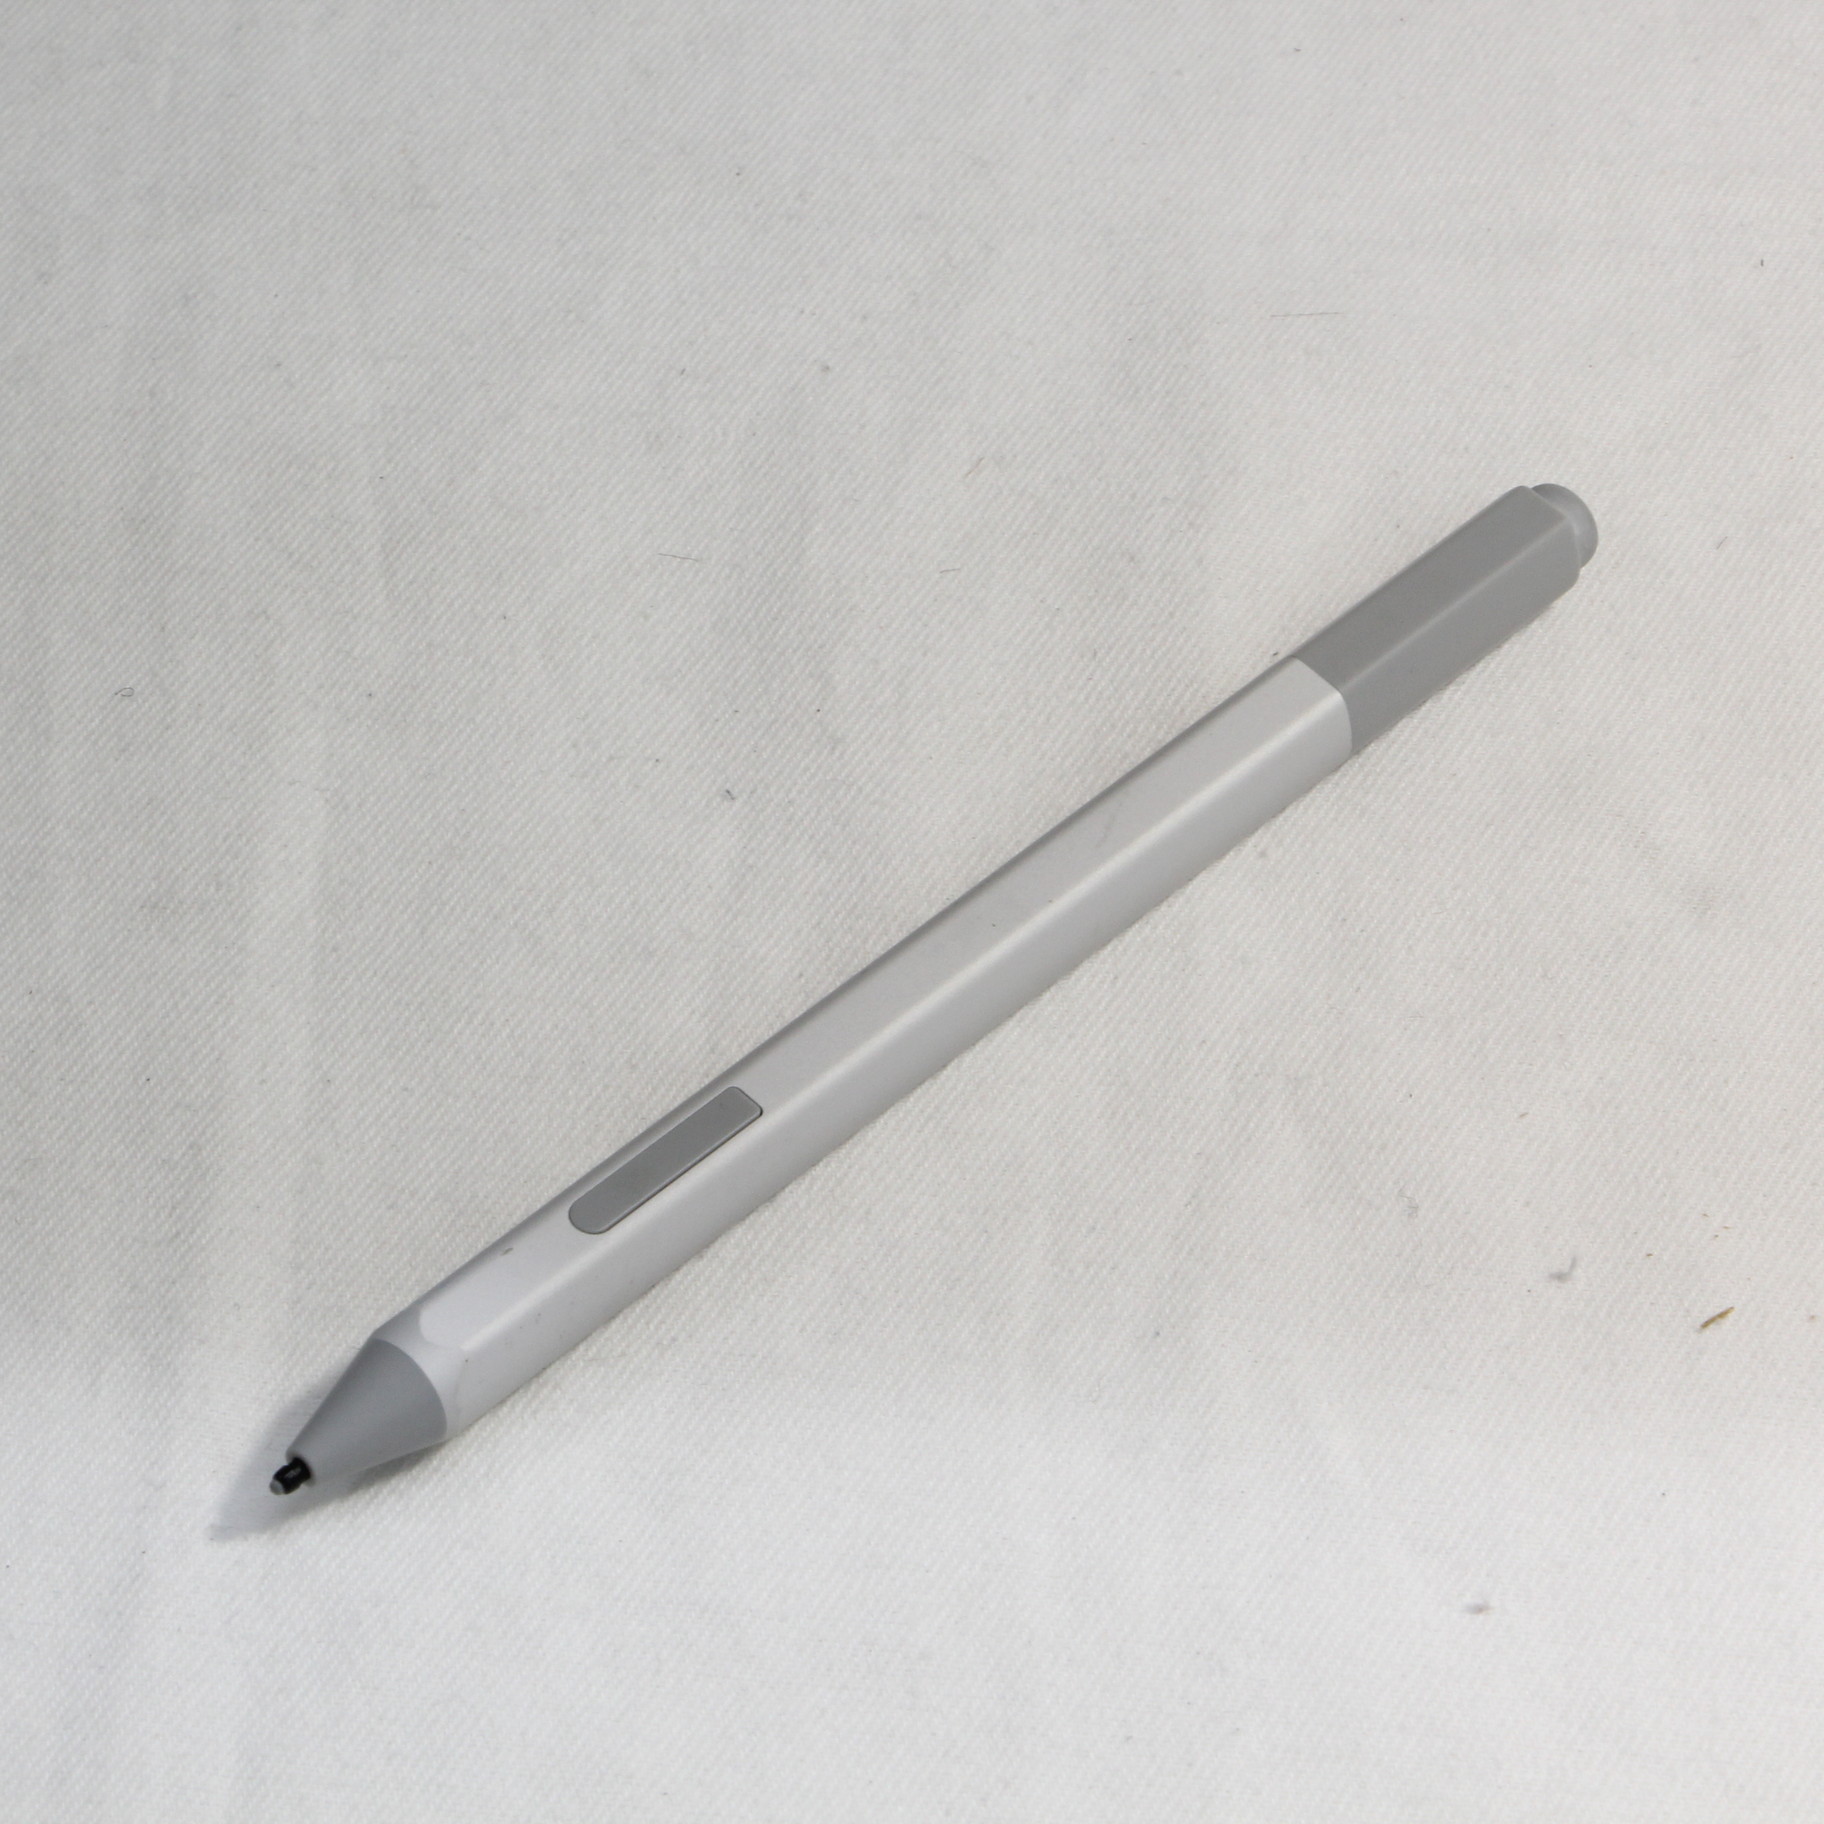 Microsoft Surface Pen　モデル1176　EYU-00015